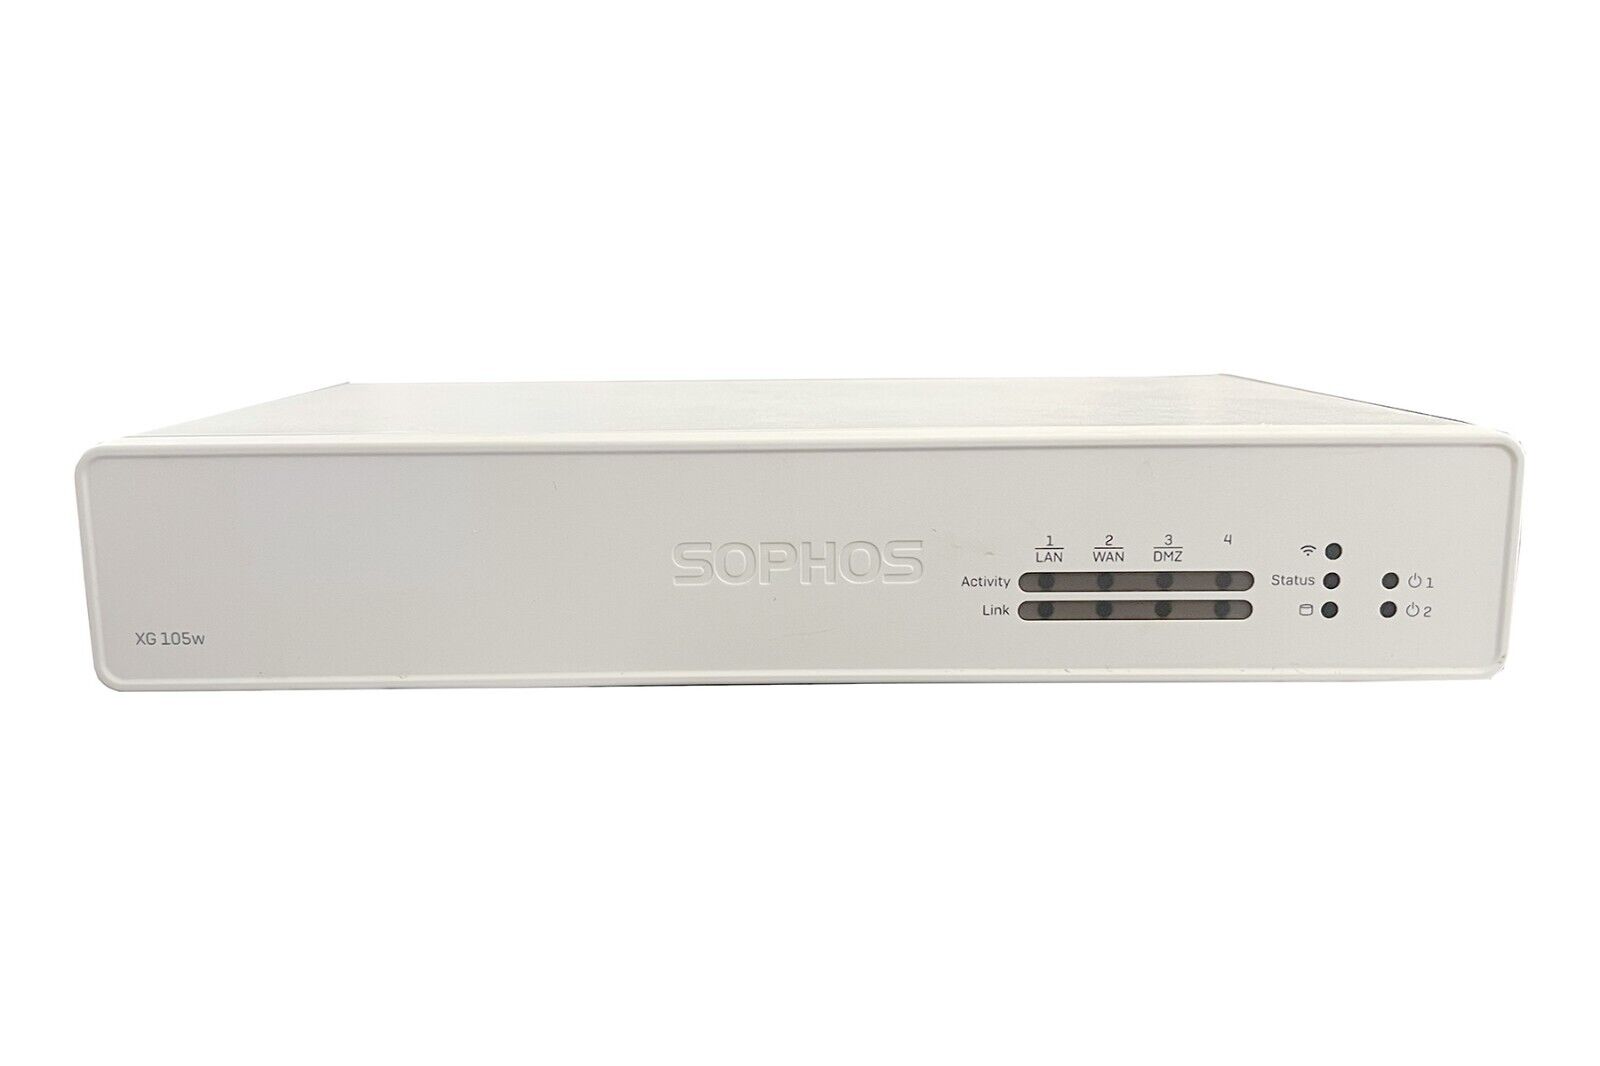 Sophos XG 105w Rev. 3 Network  Security Appliance - USED